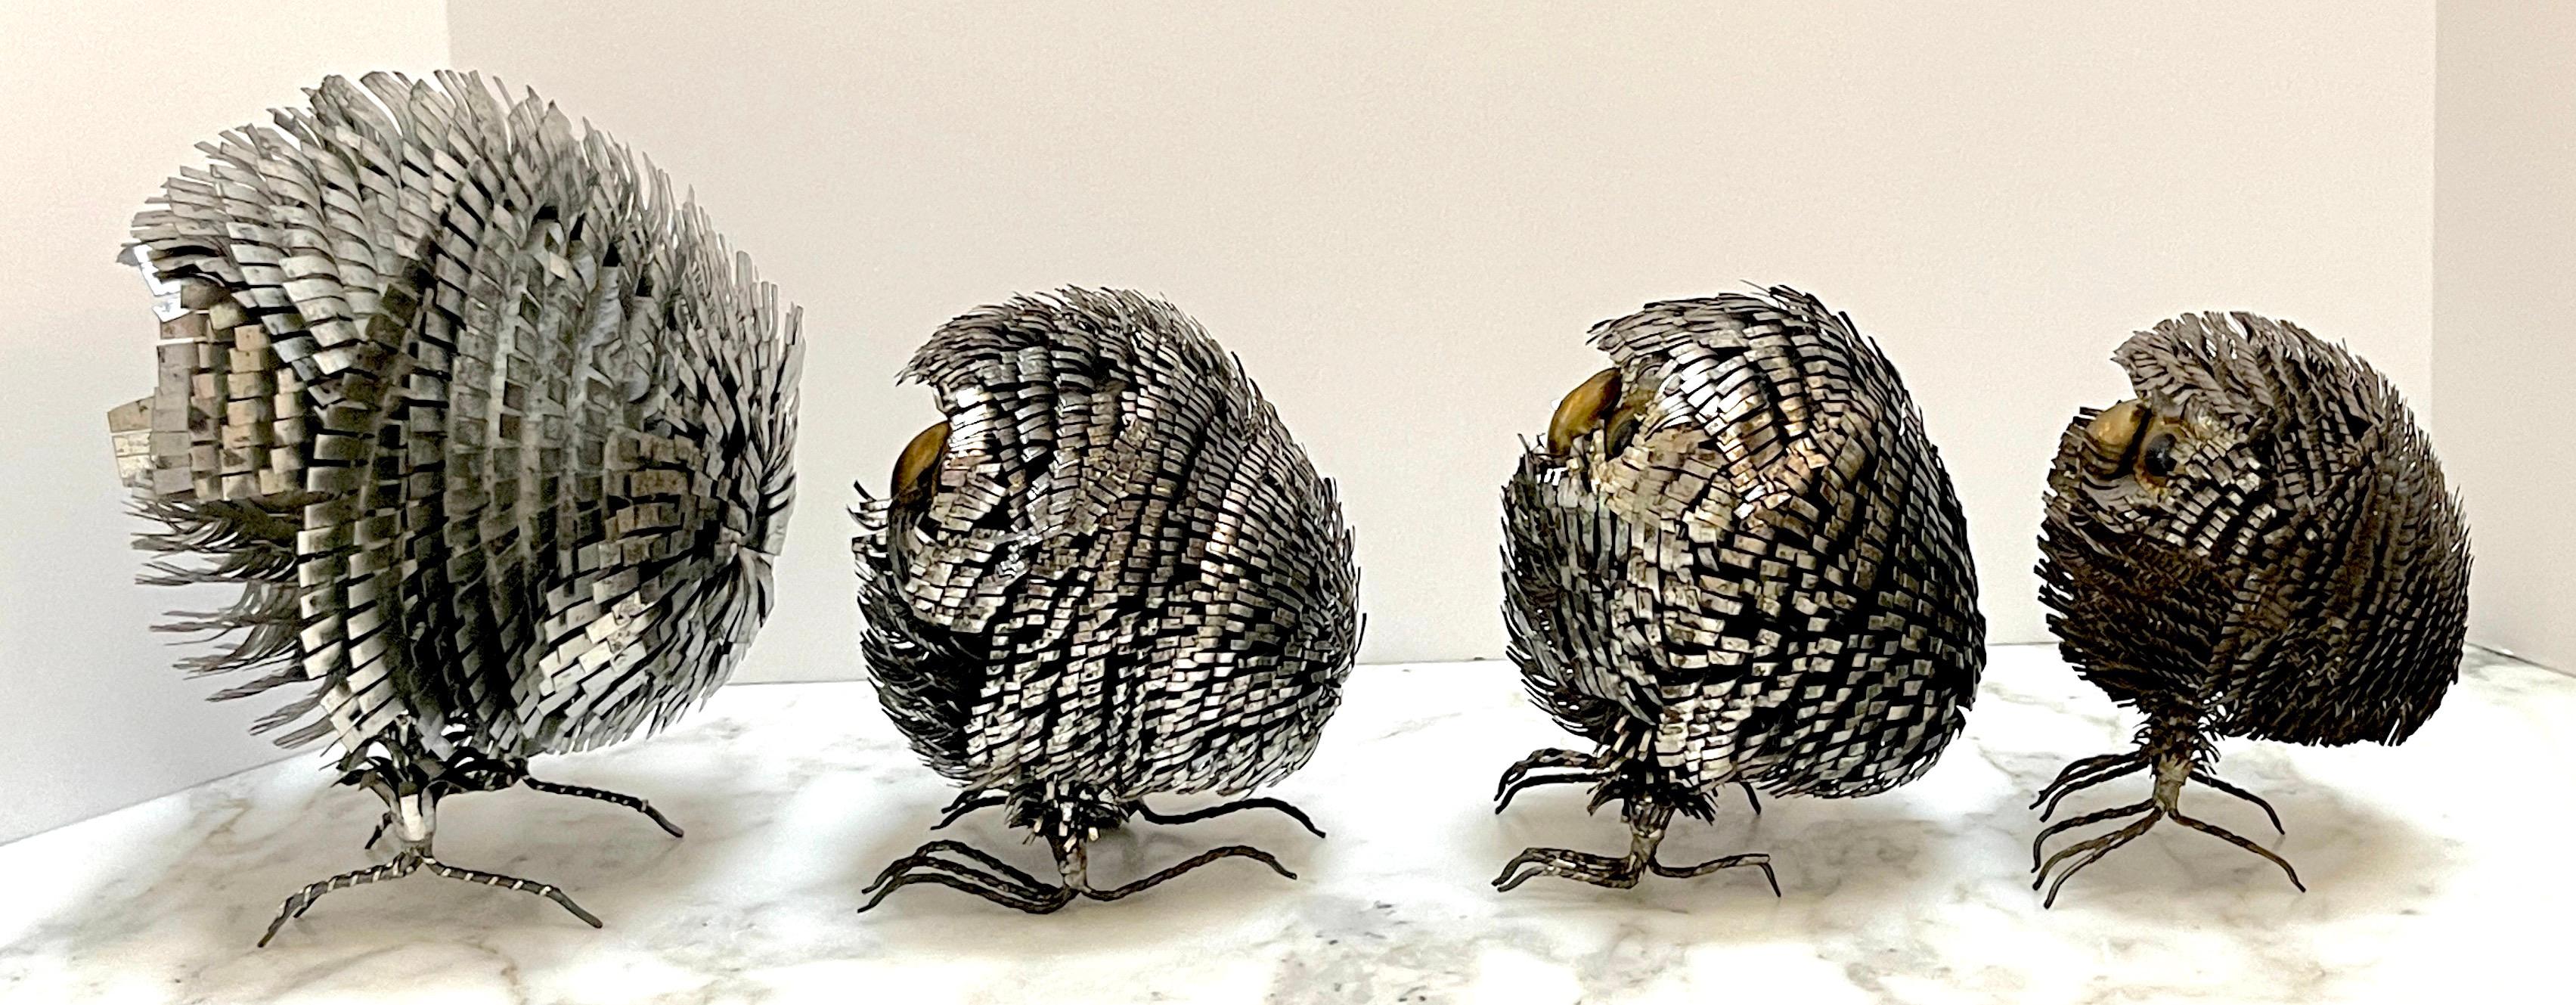 Enameled Collection of 4 Brutalist Metal Work Figures of Owls, Attrib. Sergio Bustamante